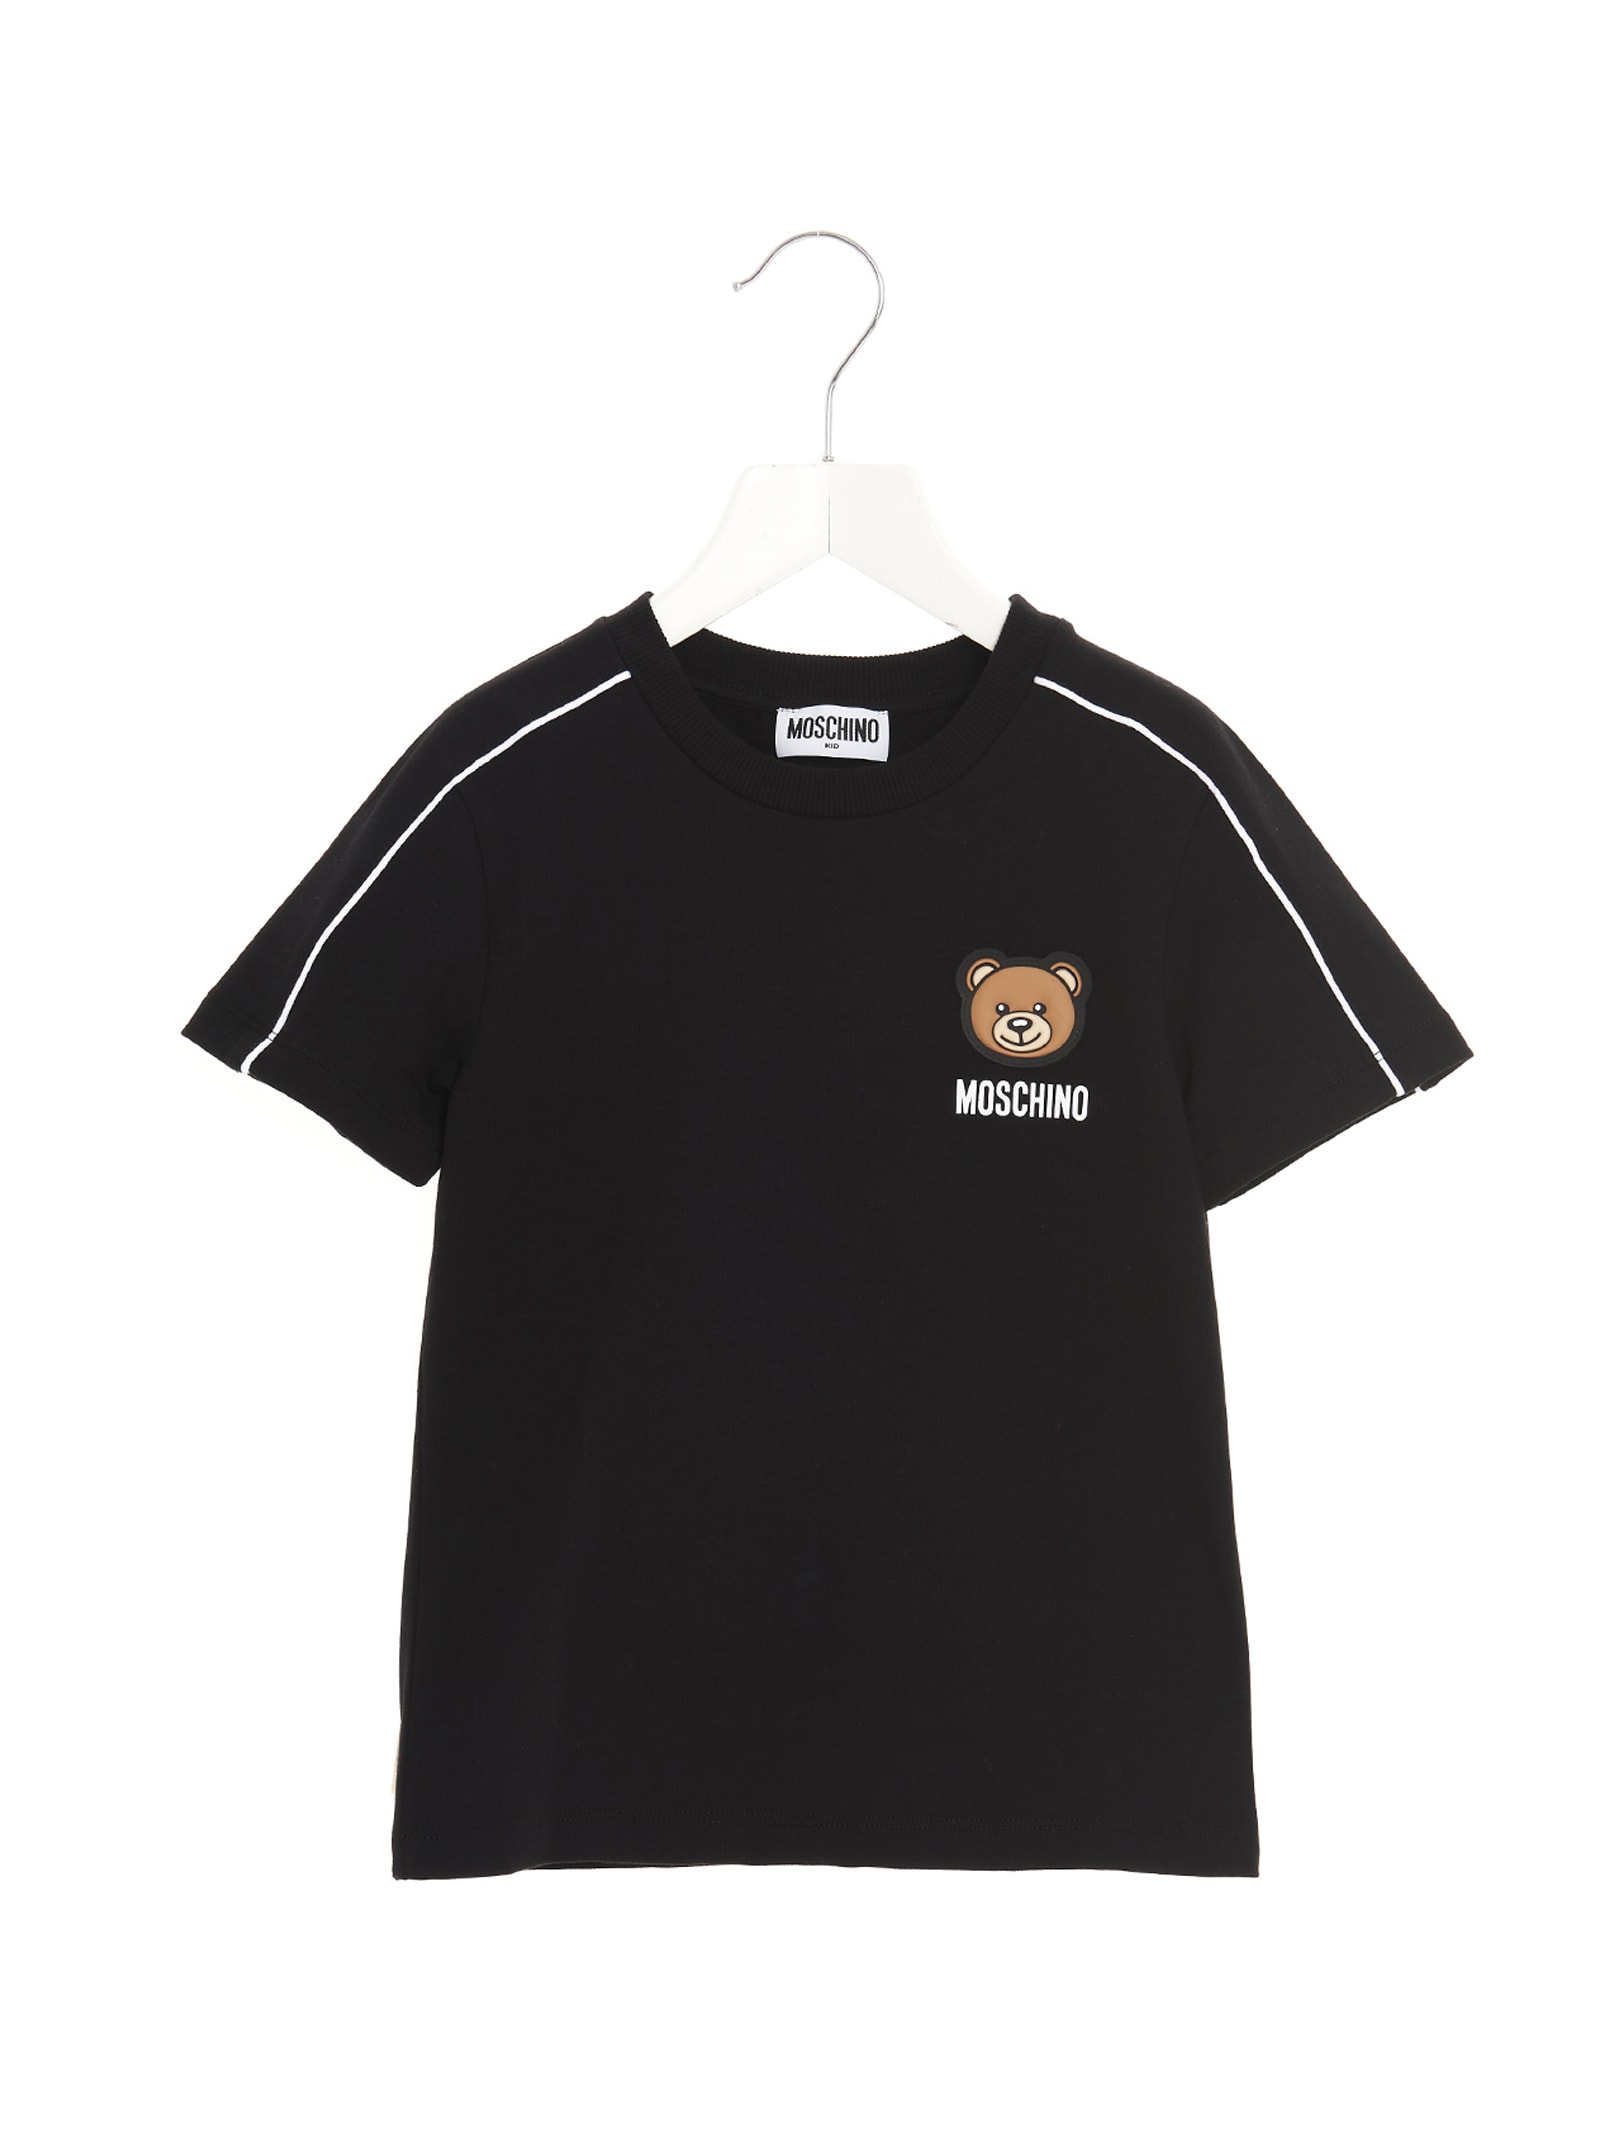 Moschino addition T-shirt